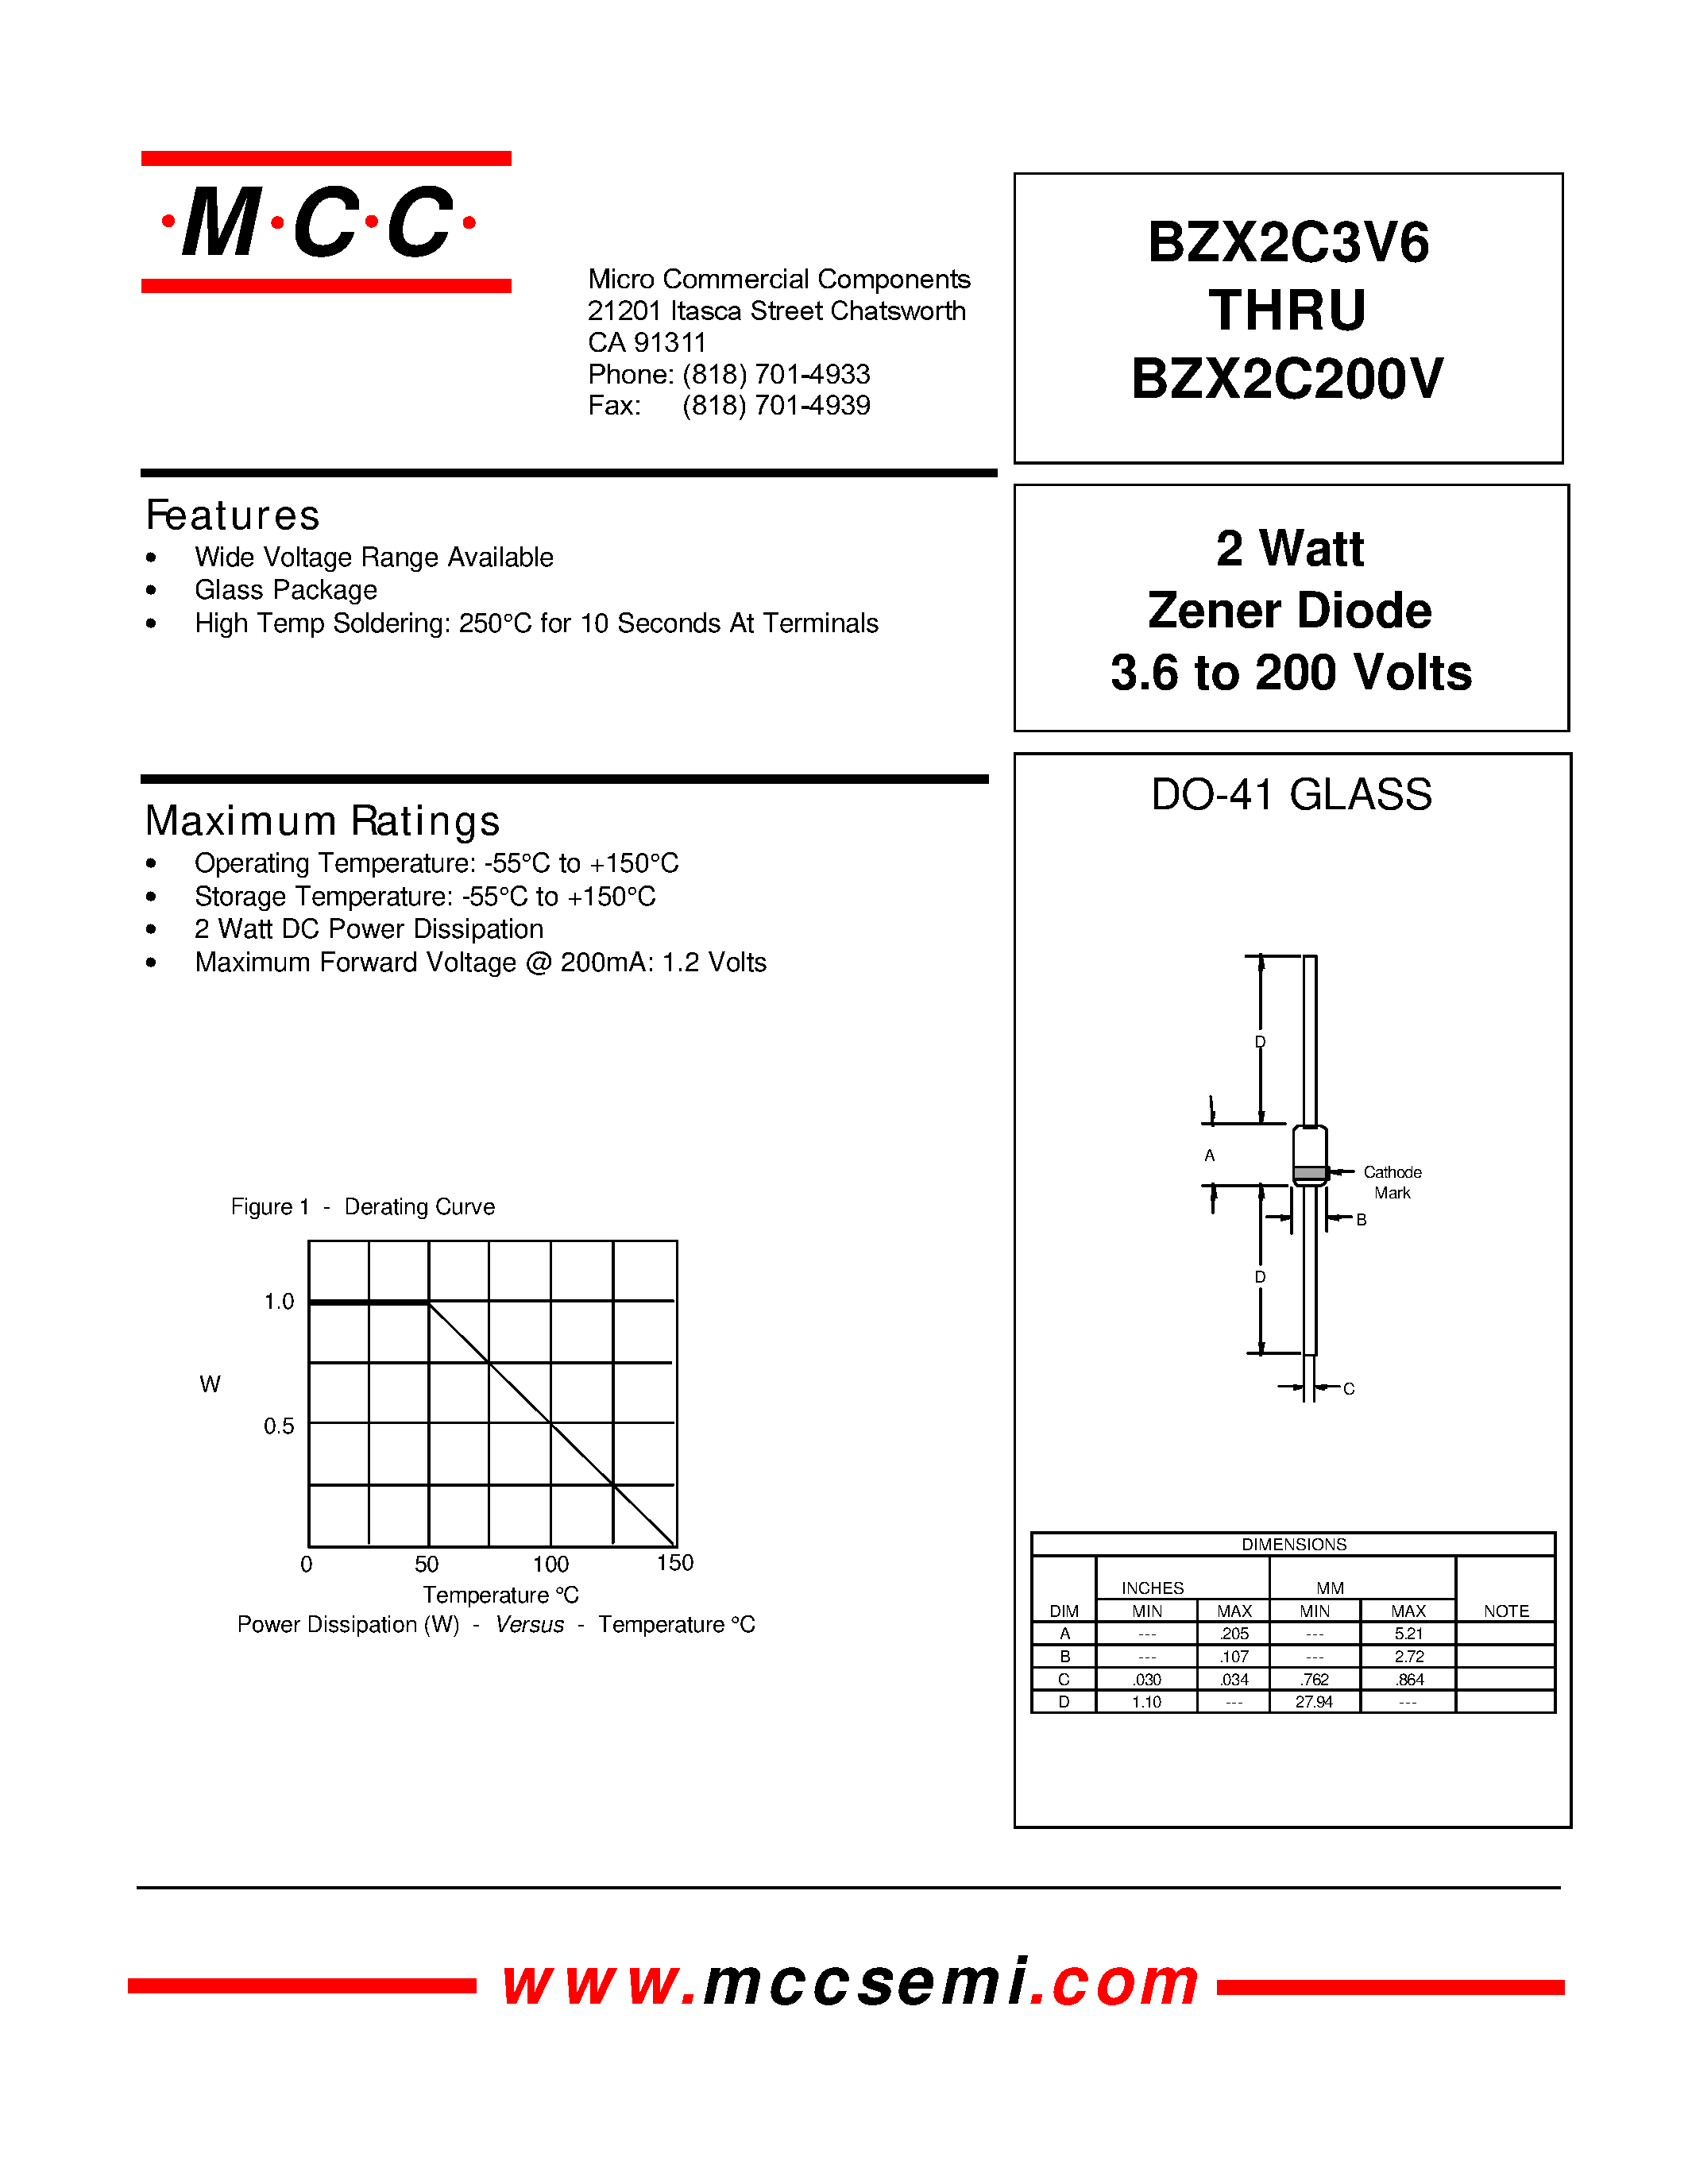 Datasheet BZX2C56V - 2 Watt Zener Diode 3.6 to 200 Volts page 1